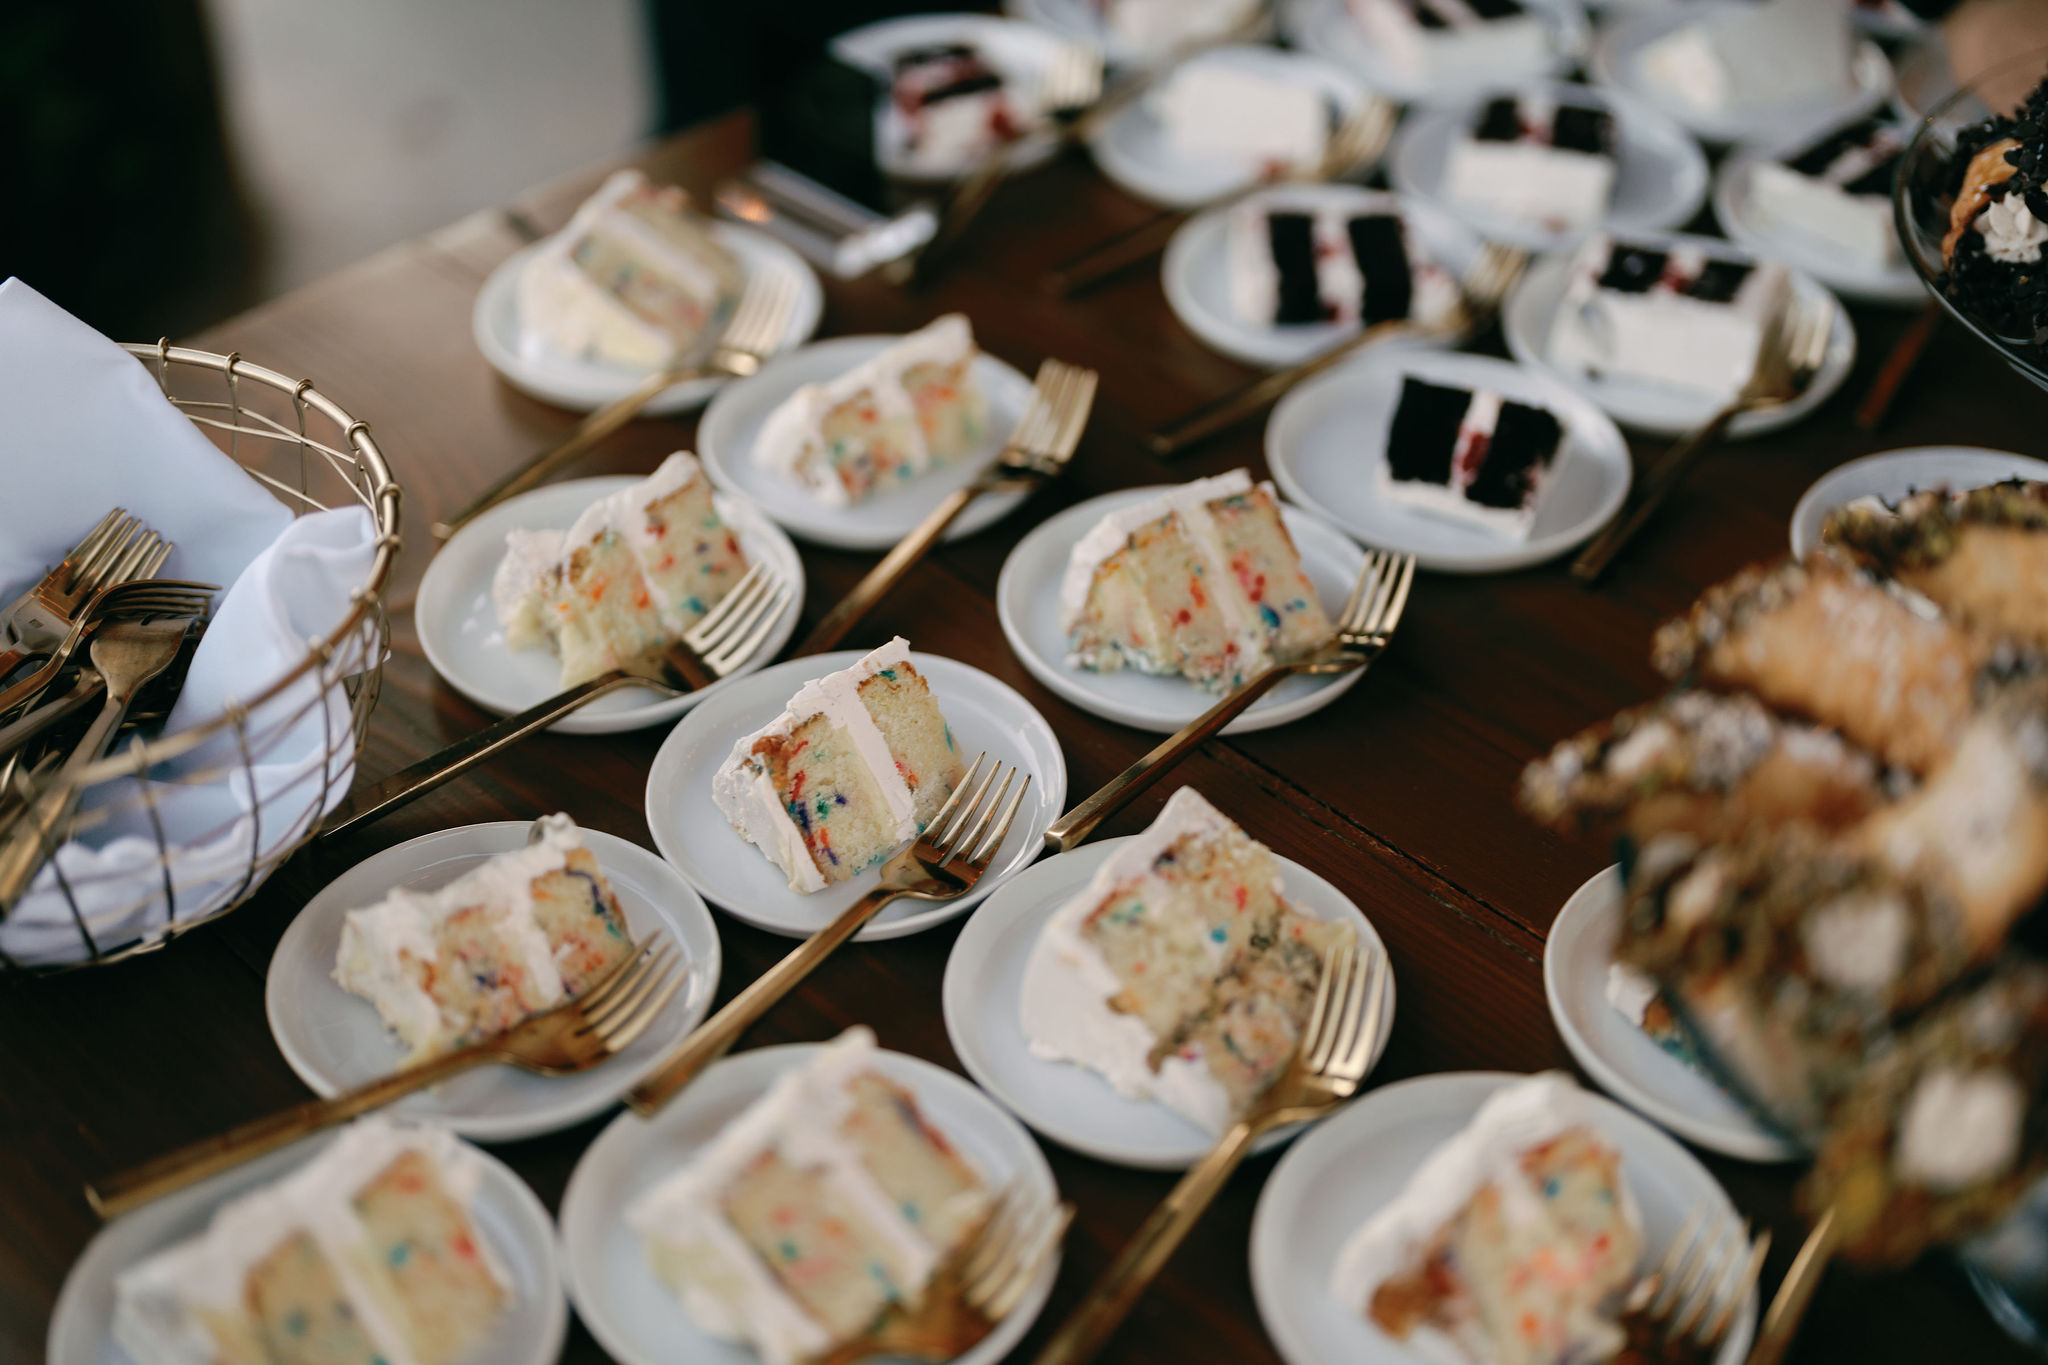 Wedding cake slices on plates